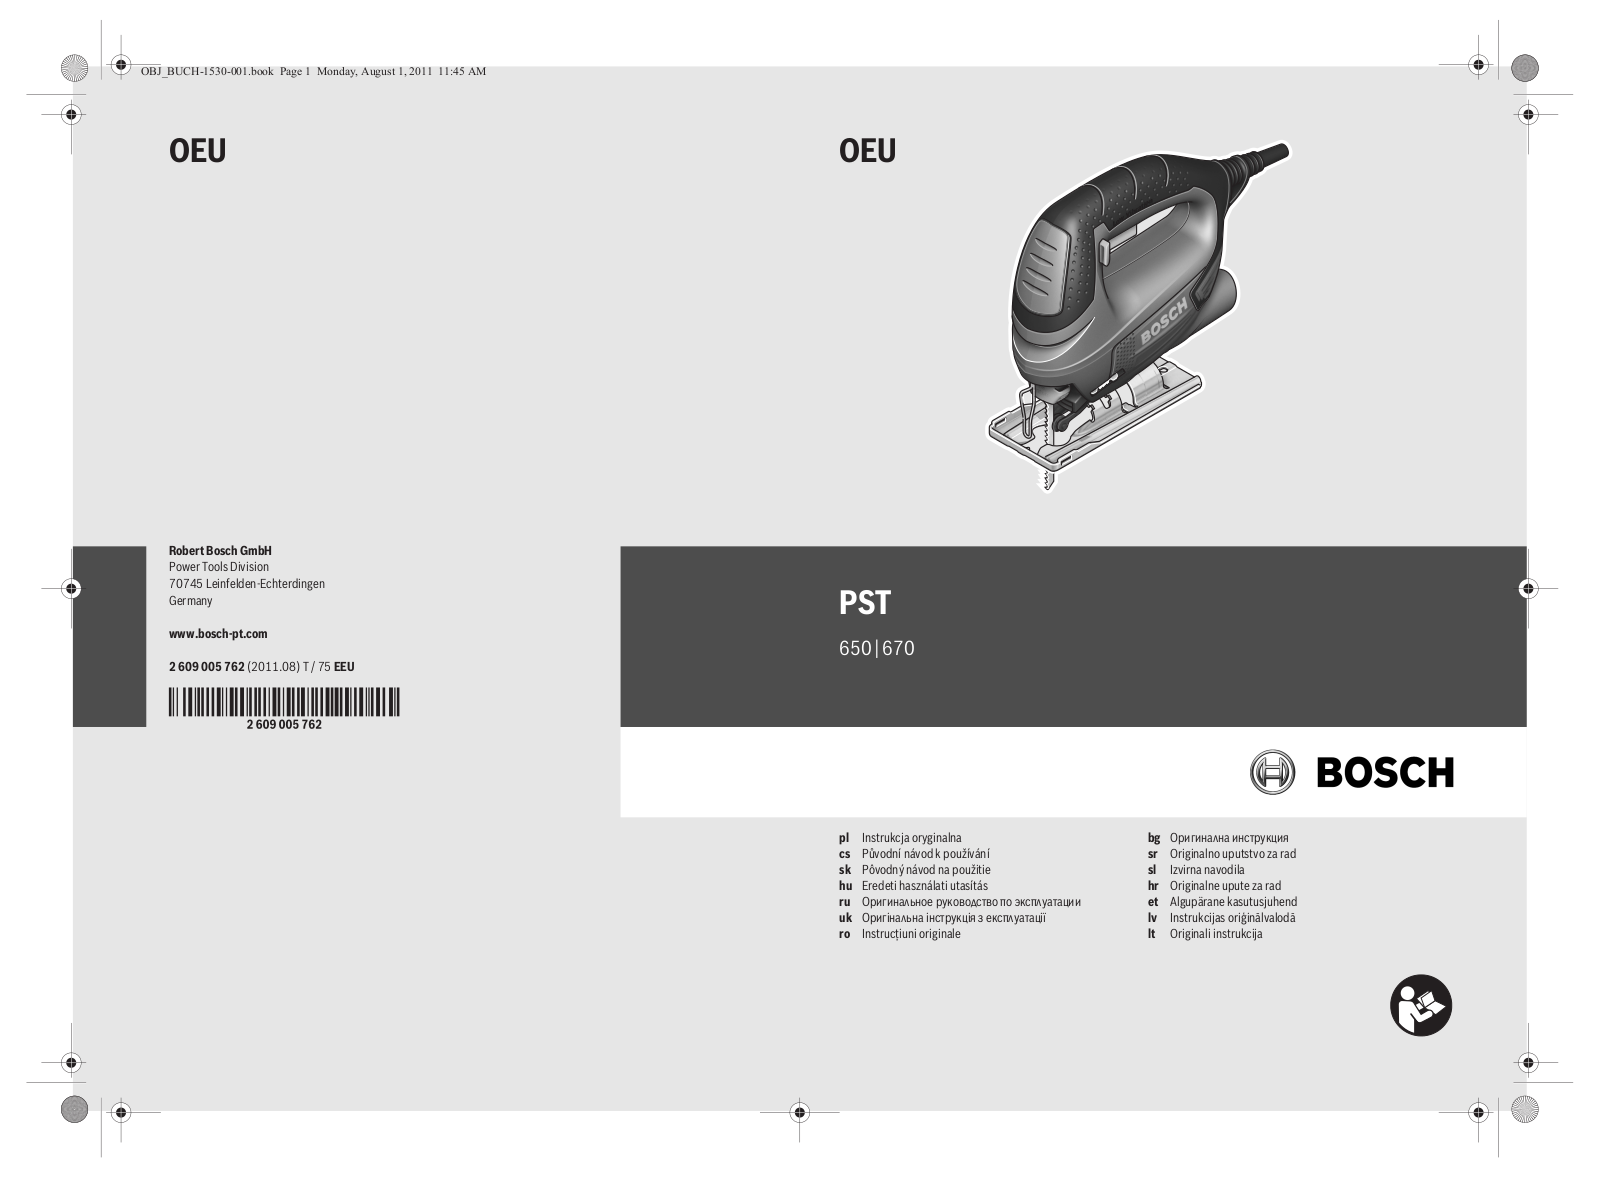 Bosch PST 650 new User manual